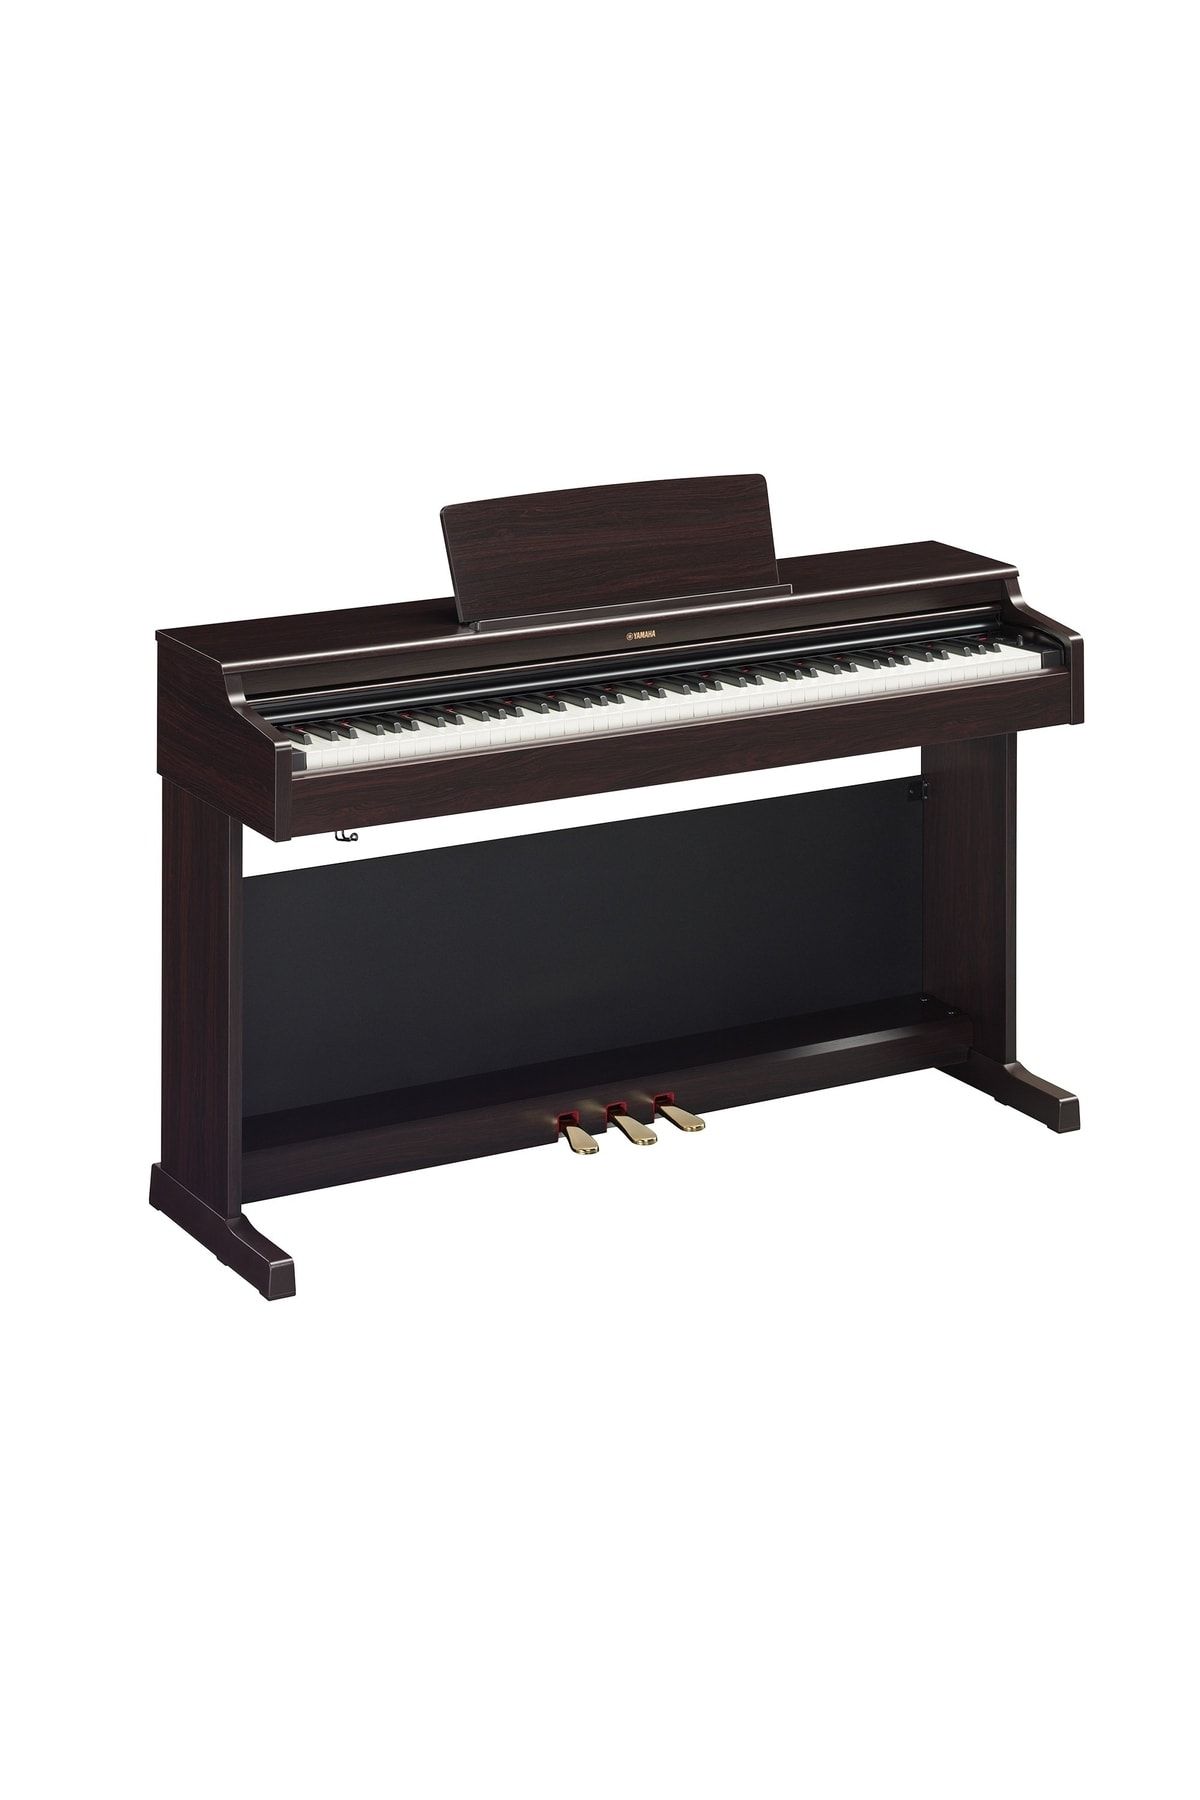 Yamaha Ydp165r Dijital Piyano (gül Ağacı)